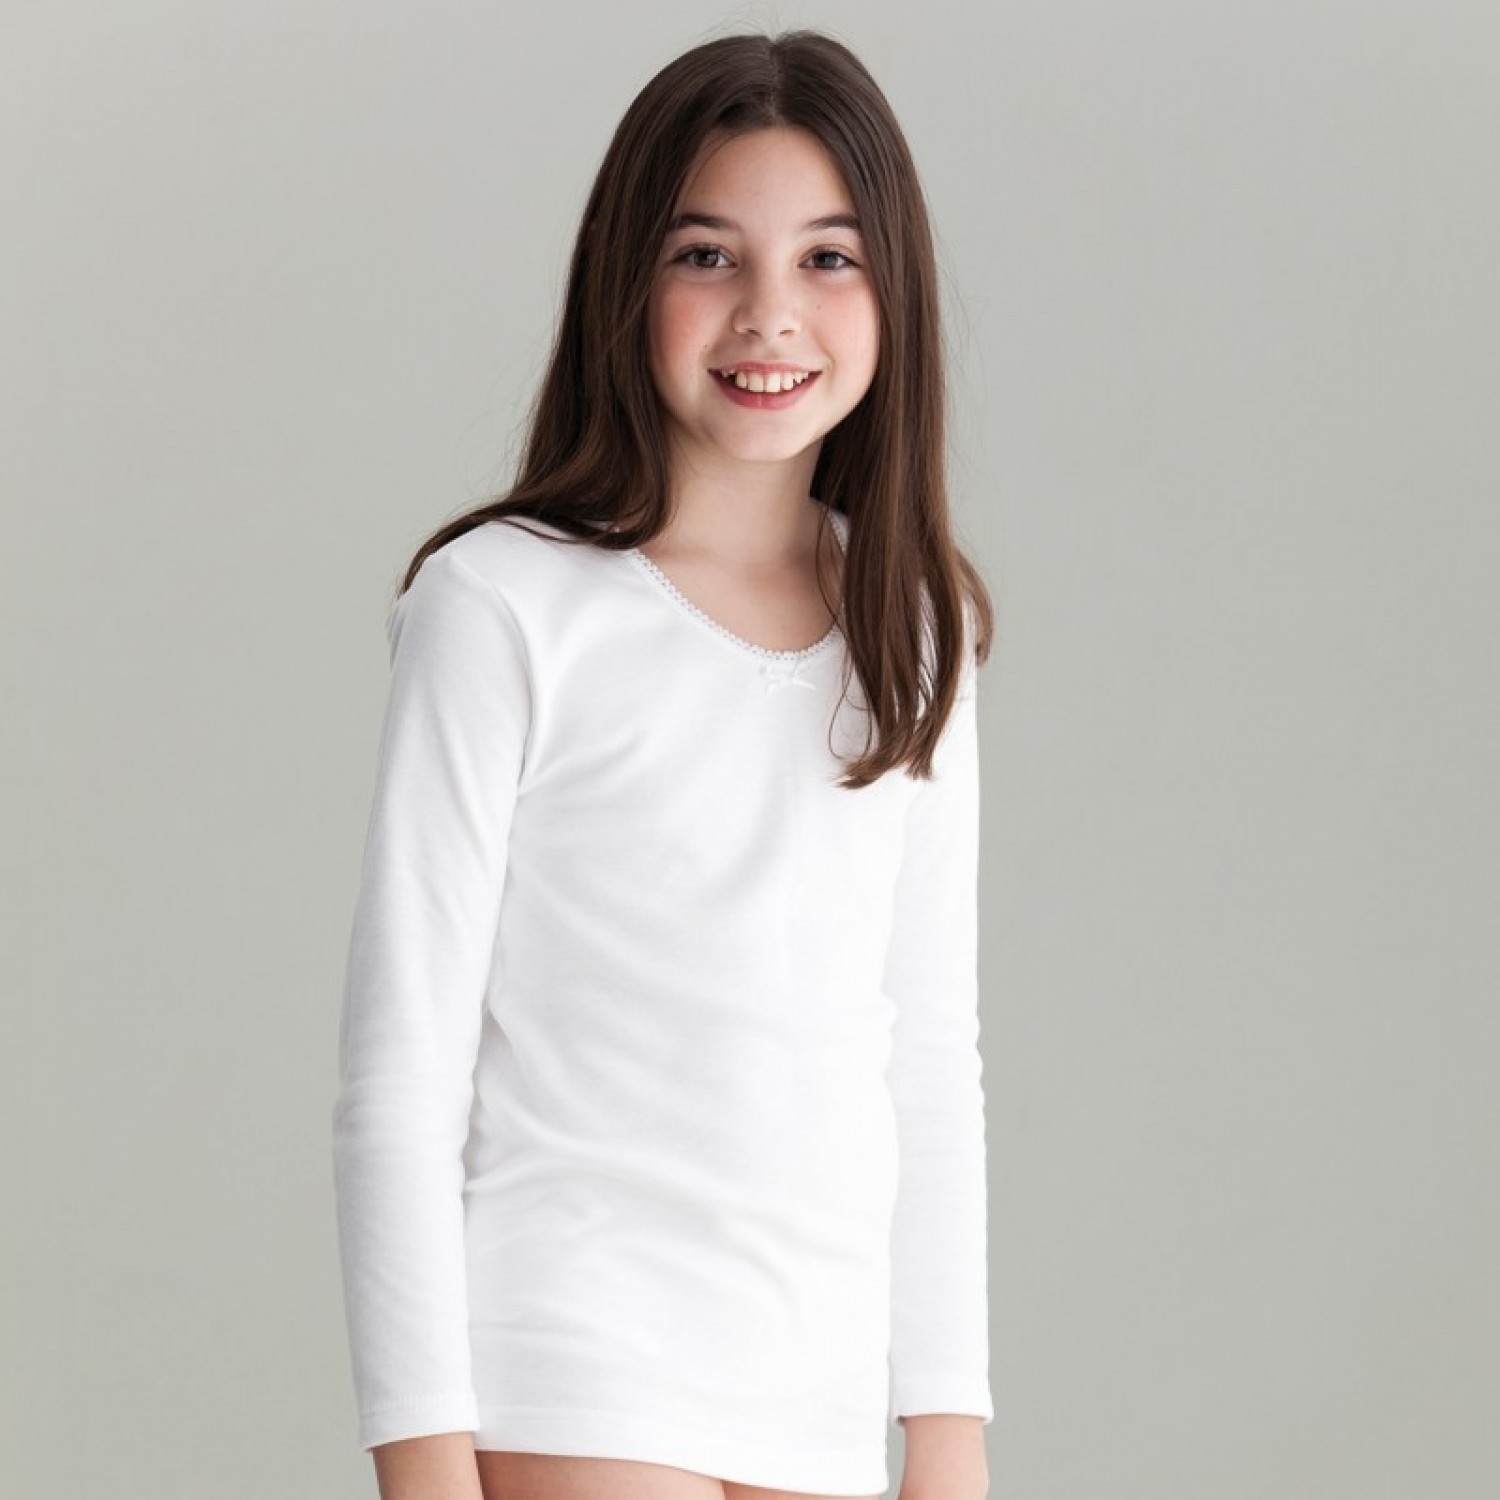 Camiseta interior de niña blanca en manga larga - Blanco